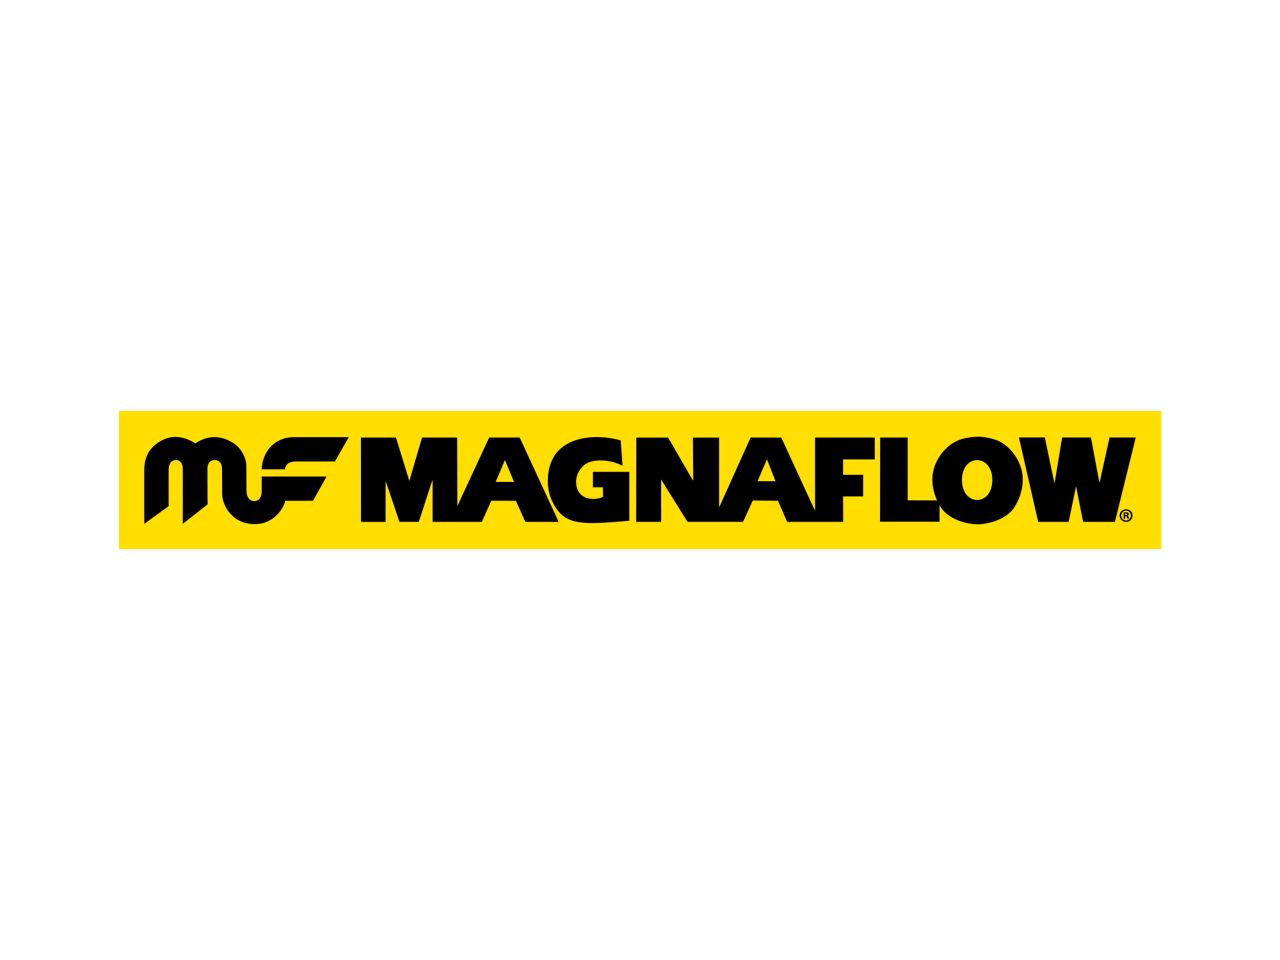 Wrangler Magnaflow Parts